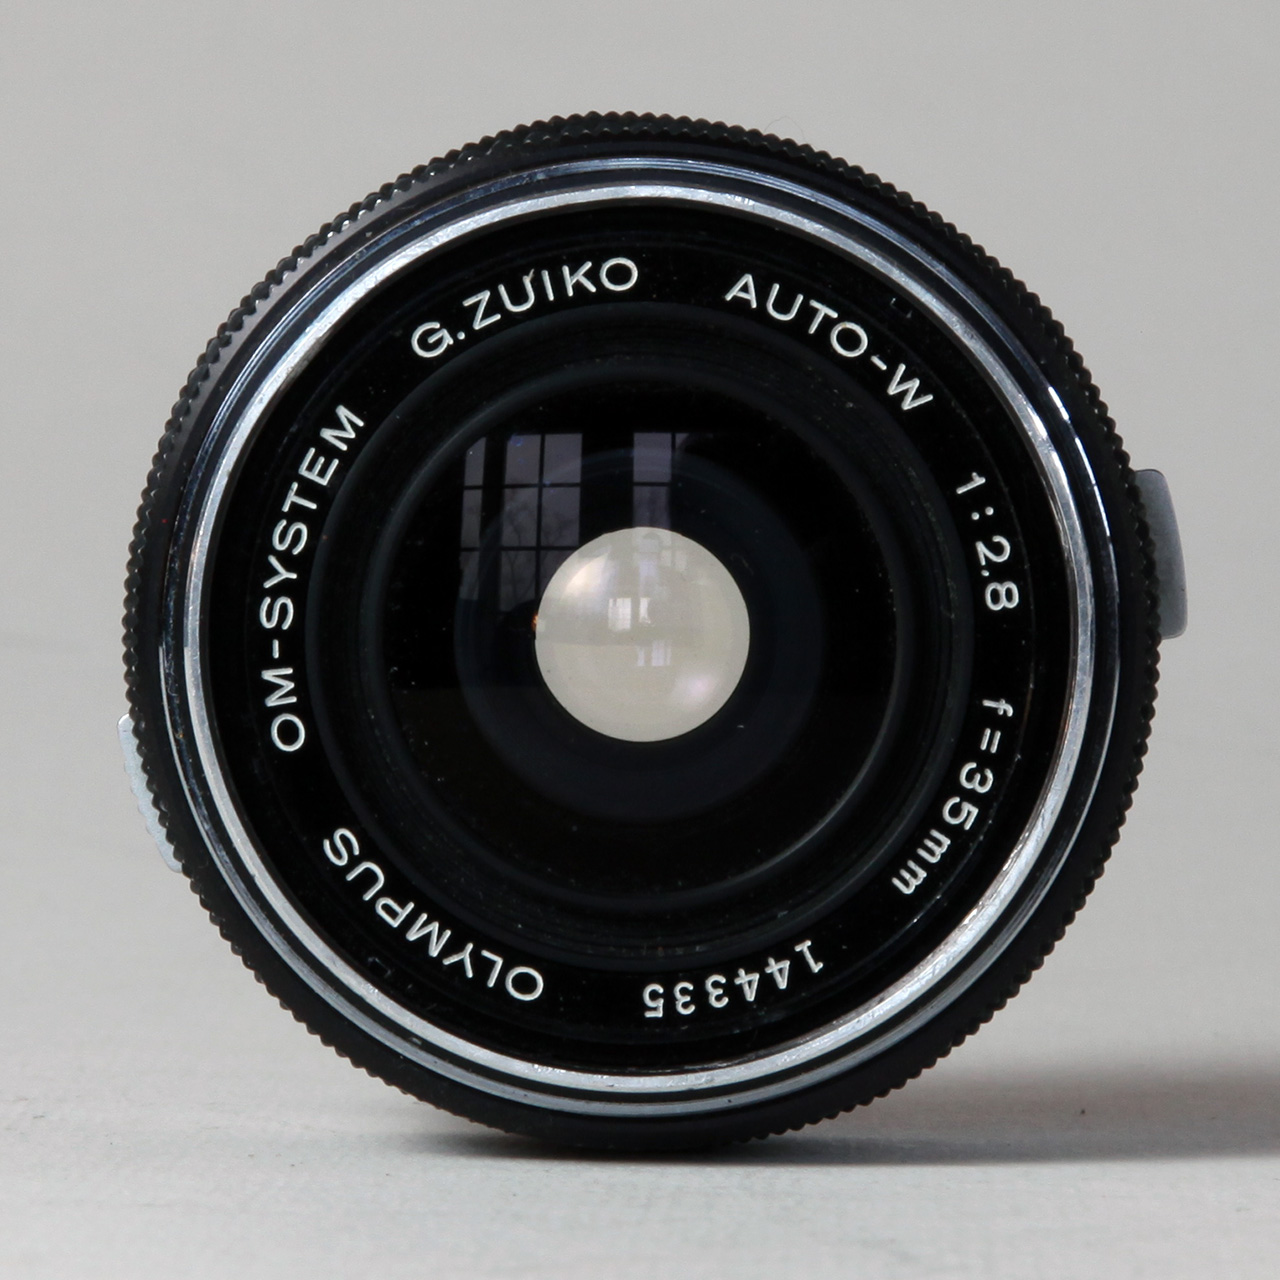 Click to Enlarge - Olympus OM System G.Zuiko Auto-W 1:2.8 f=35mm